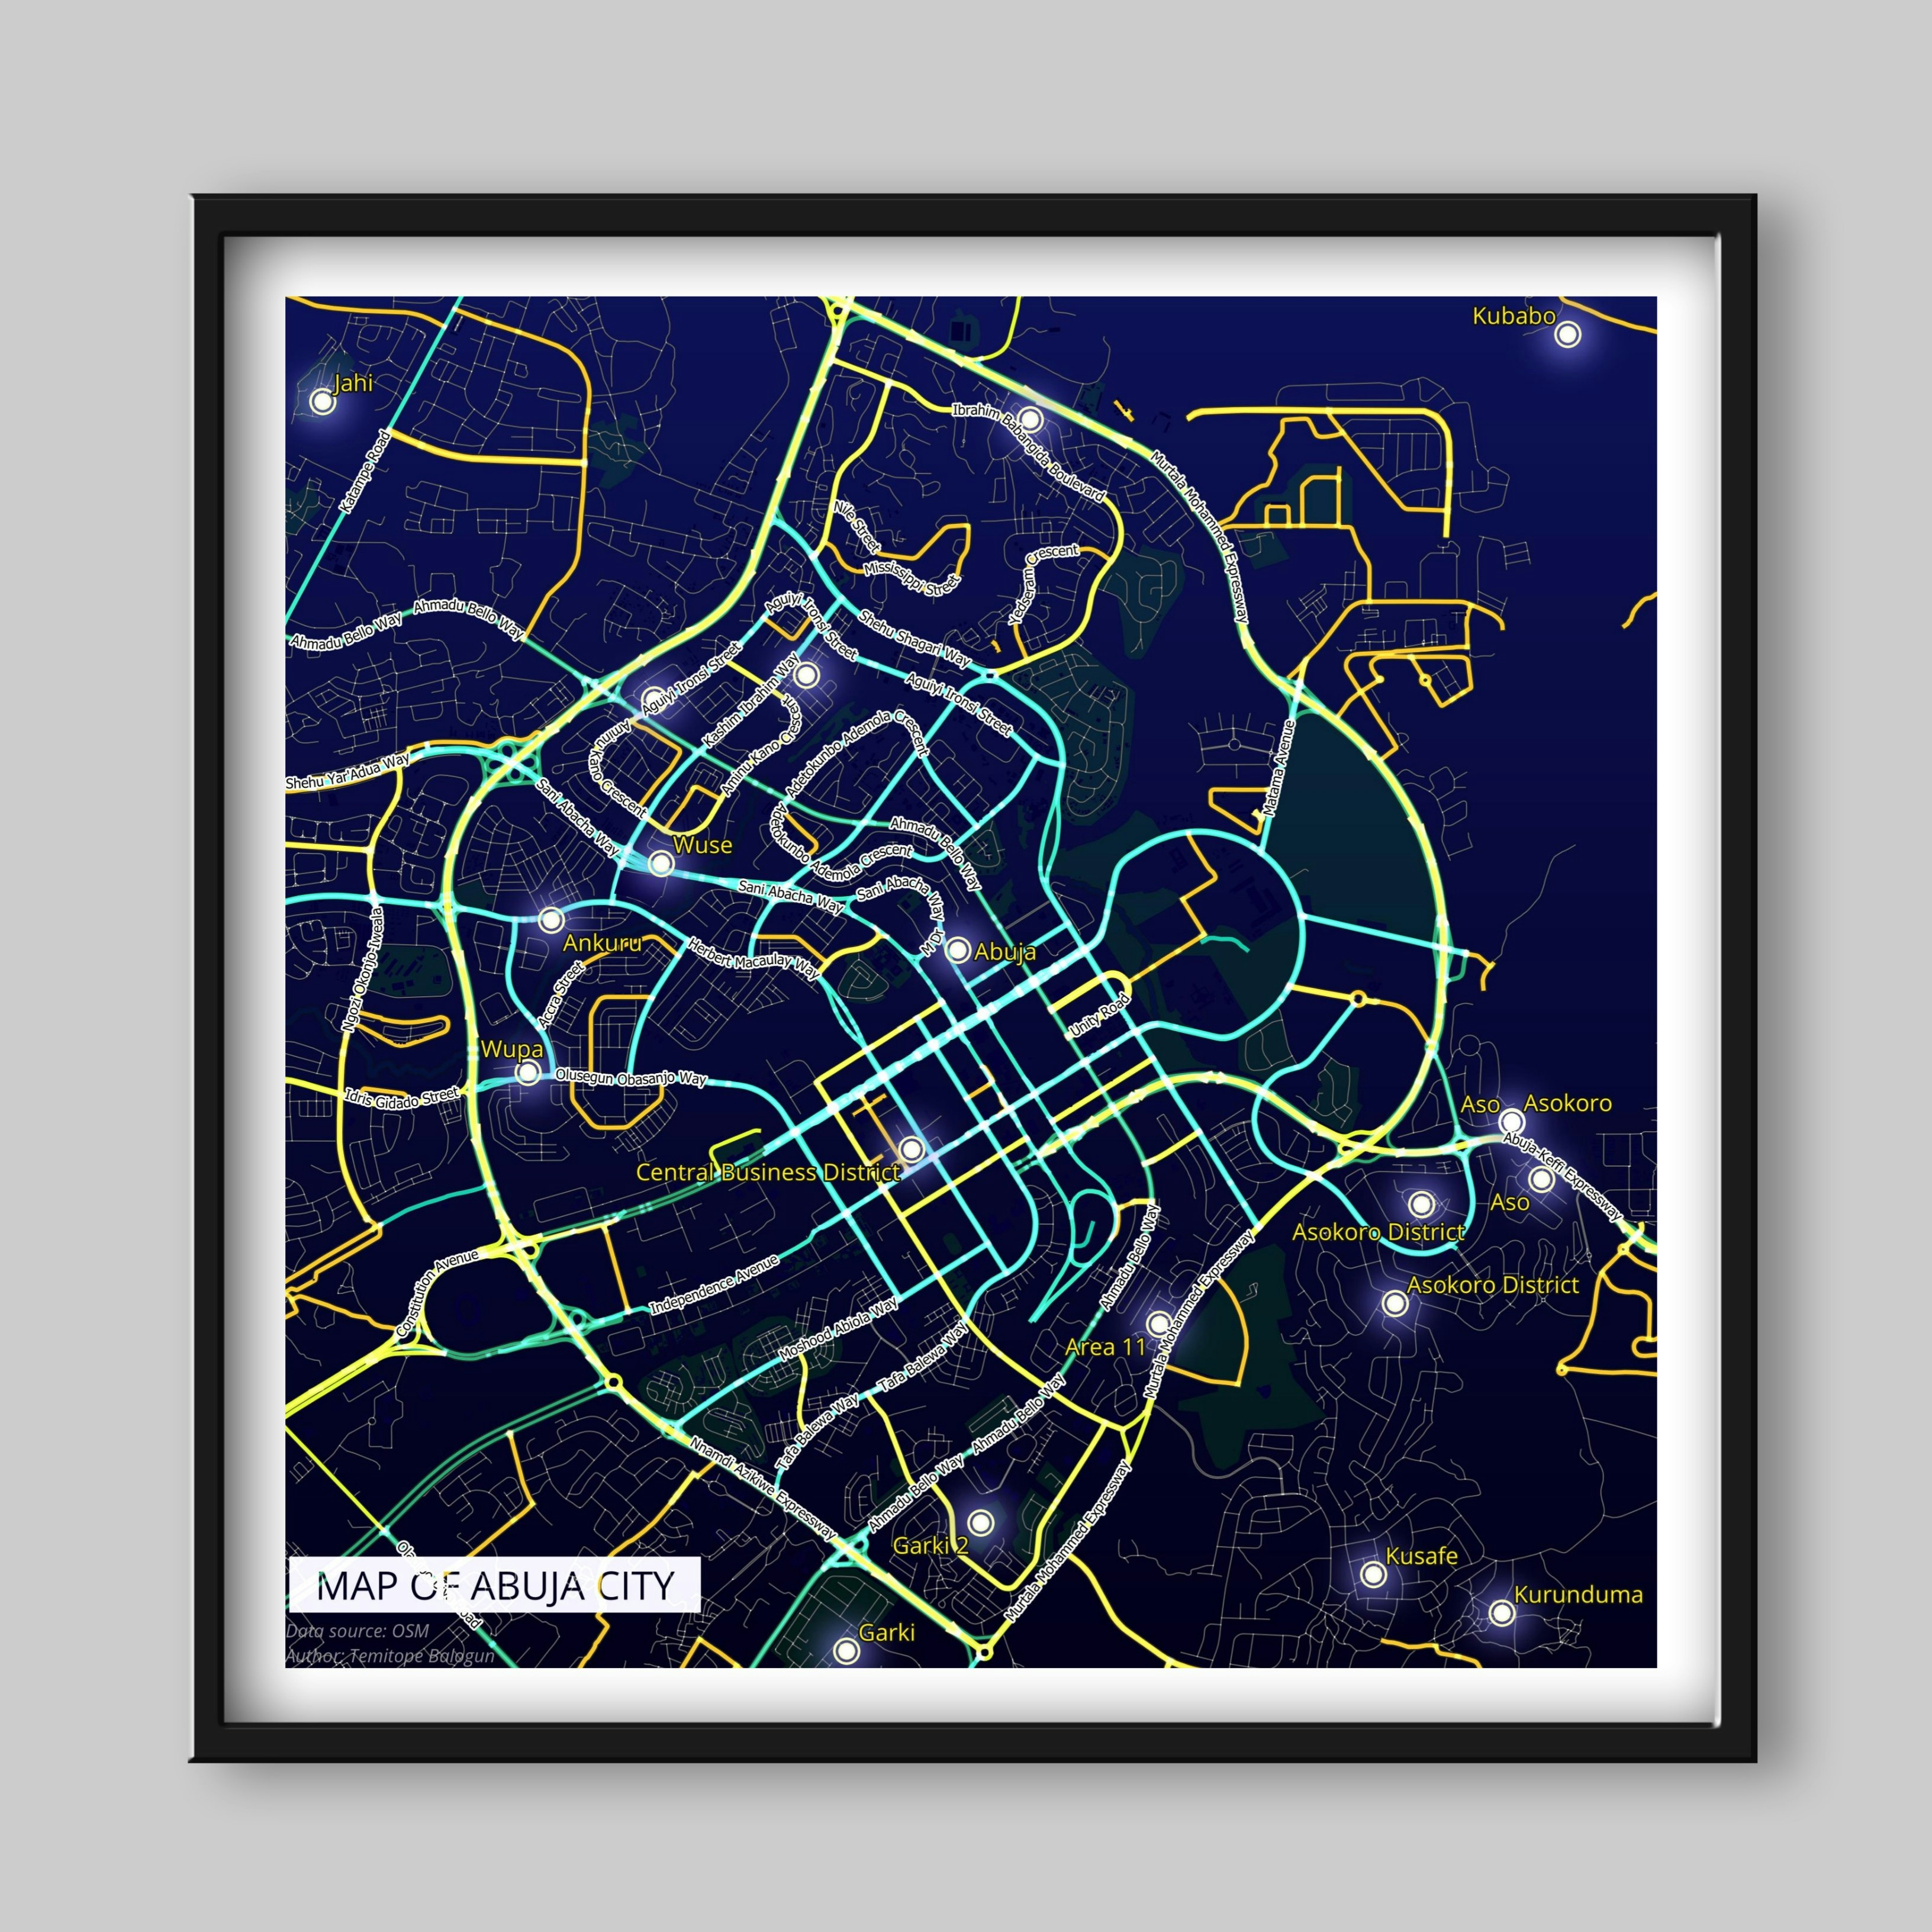 Map of Abuja City, Nigeria